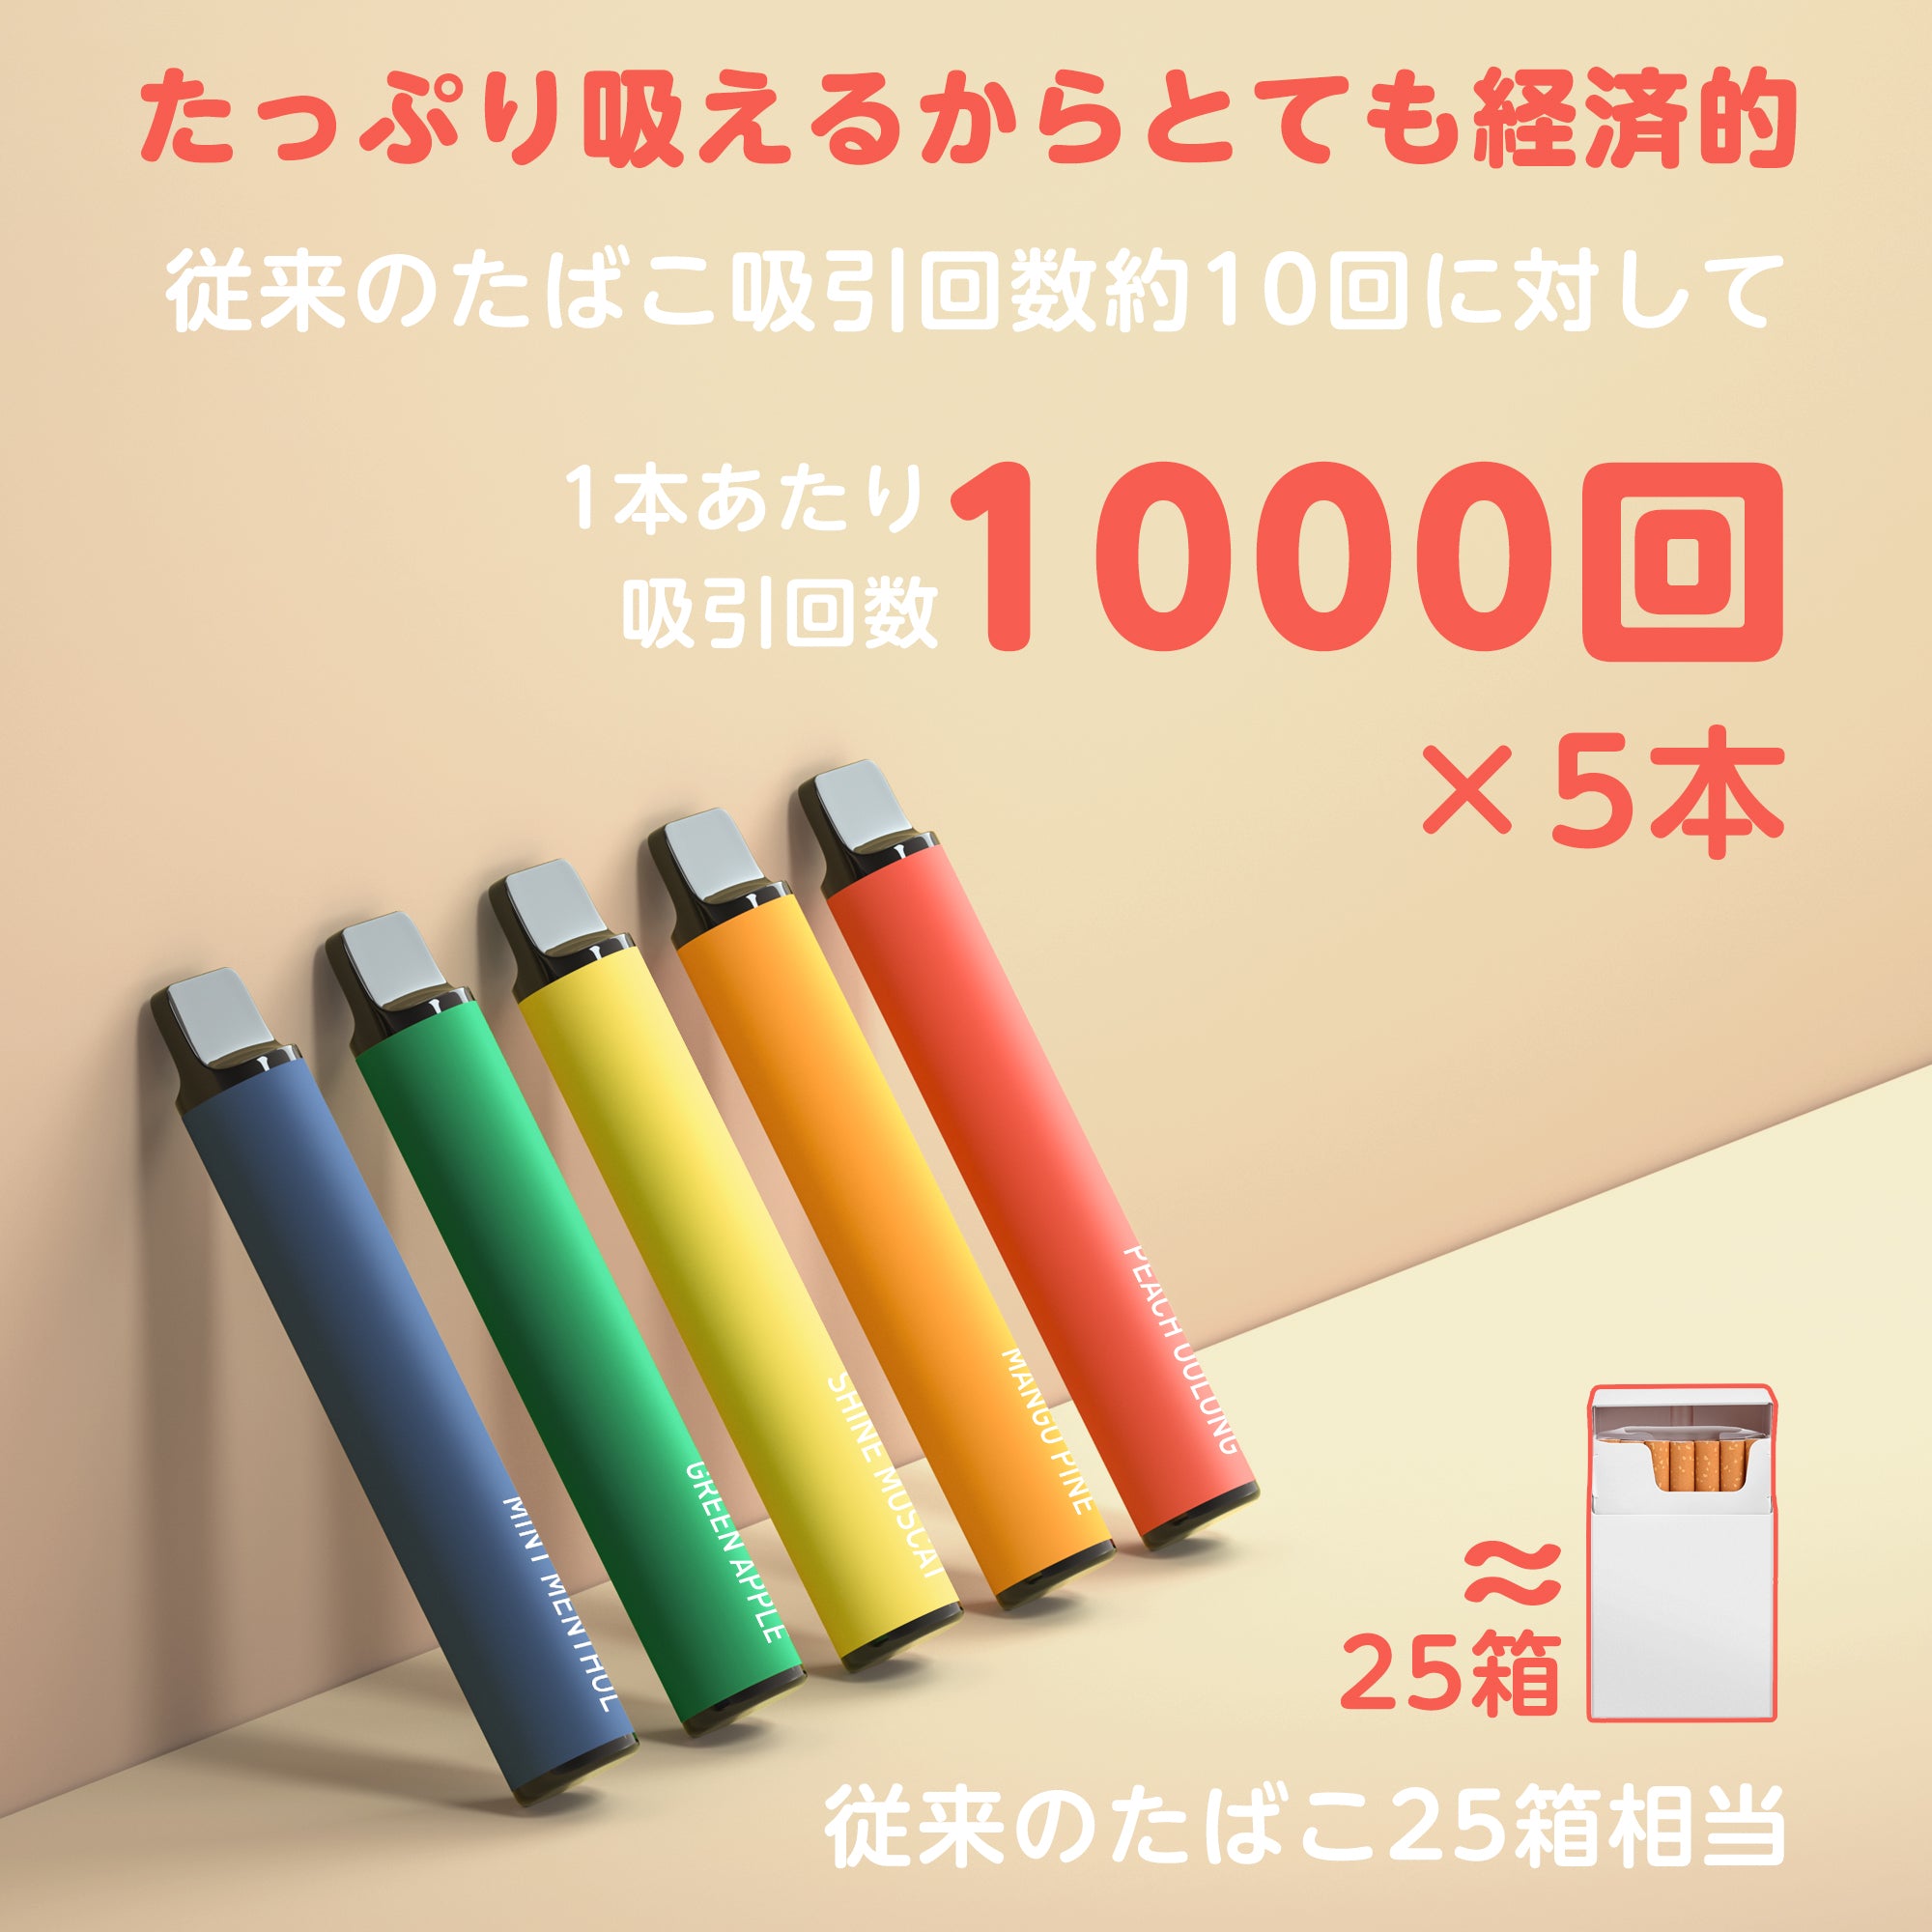 KINOE Electronic Cigarette Disposable 5 Flavors Set of 5 MIX 1